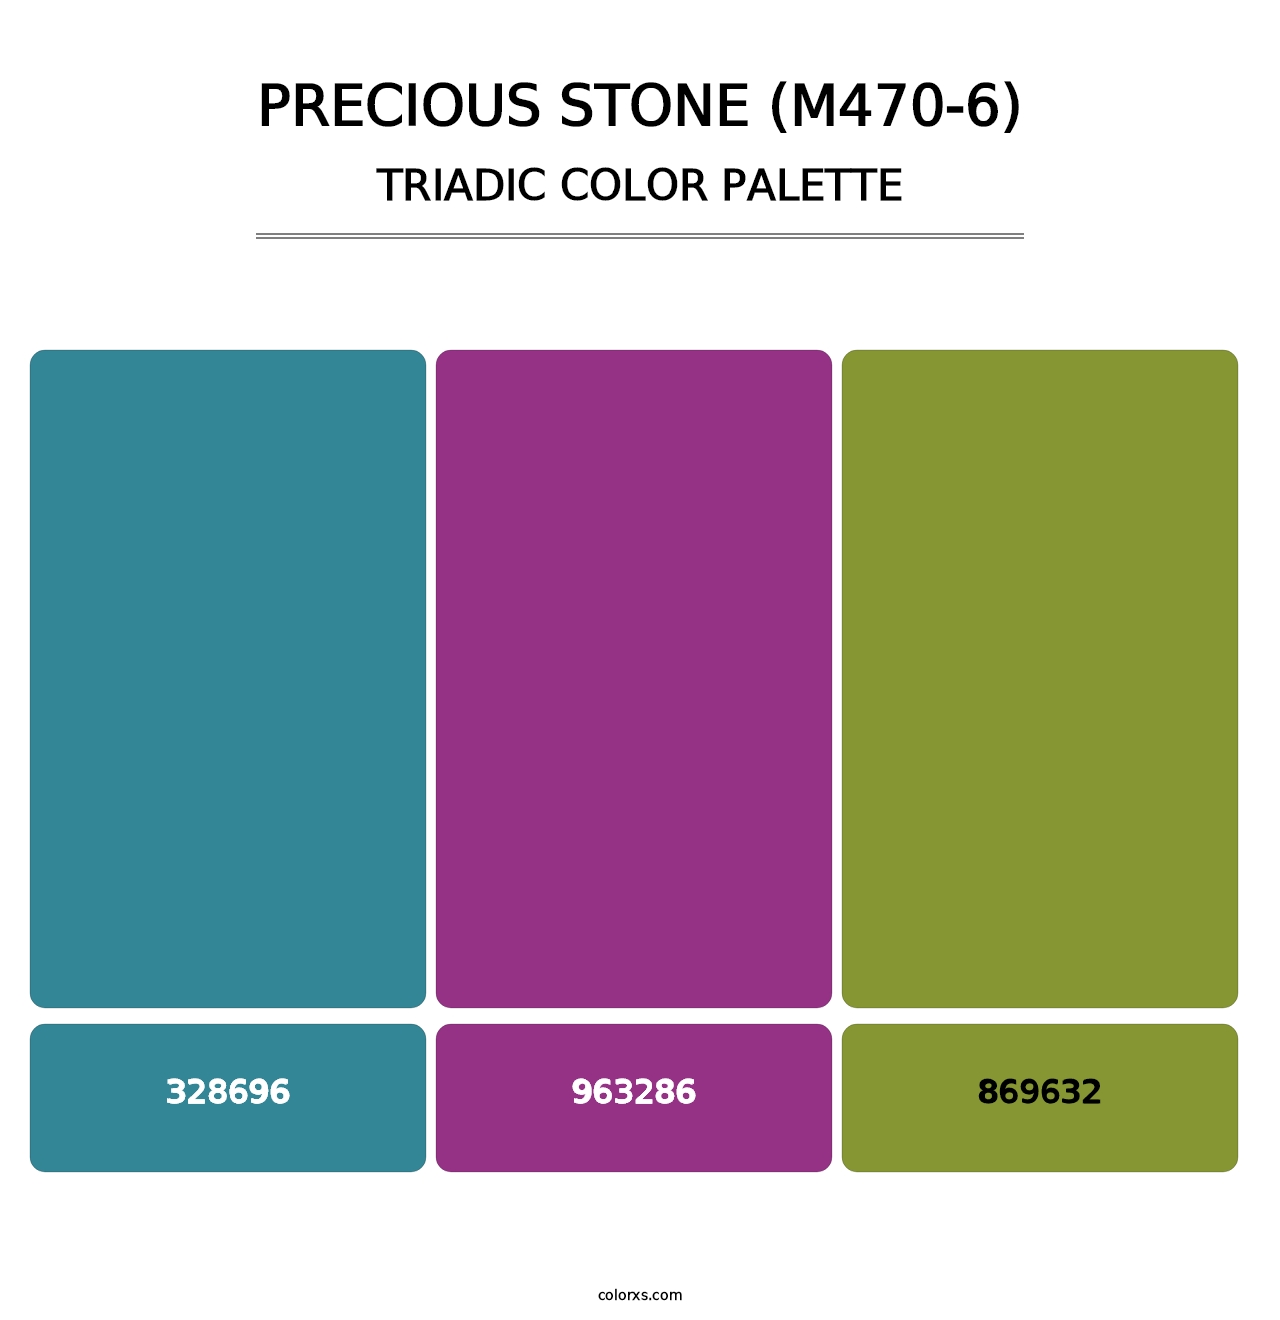 Precious Stone (M470-6) - Triadic Color Palette